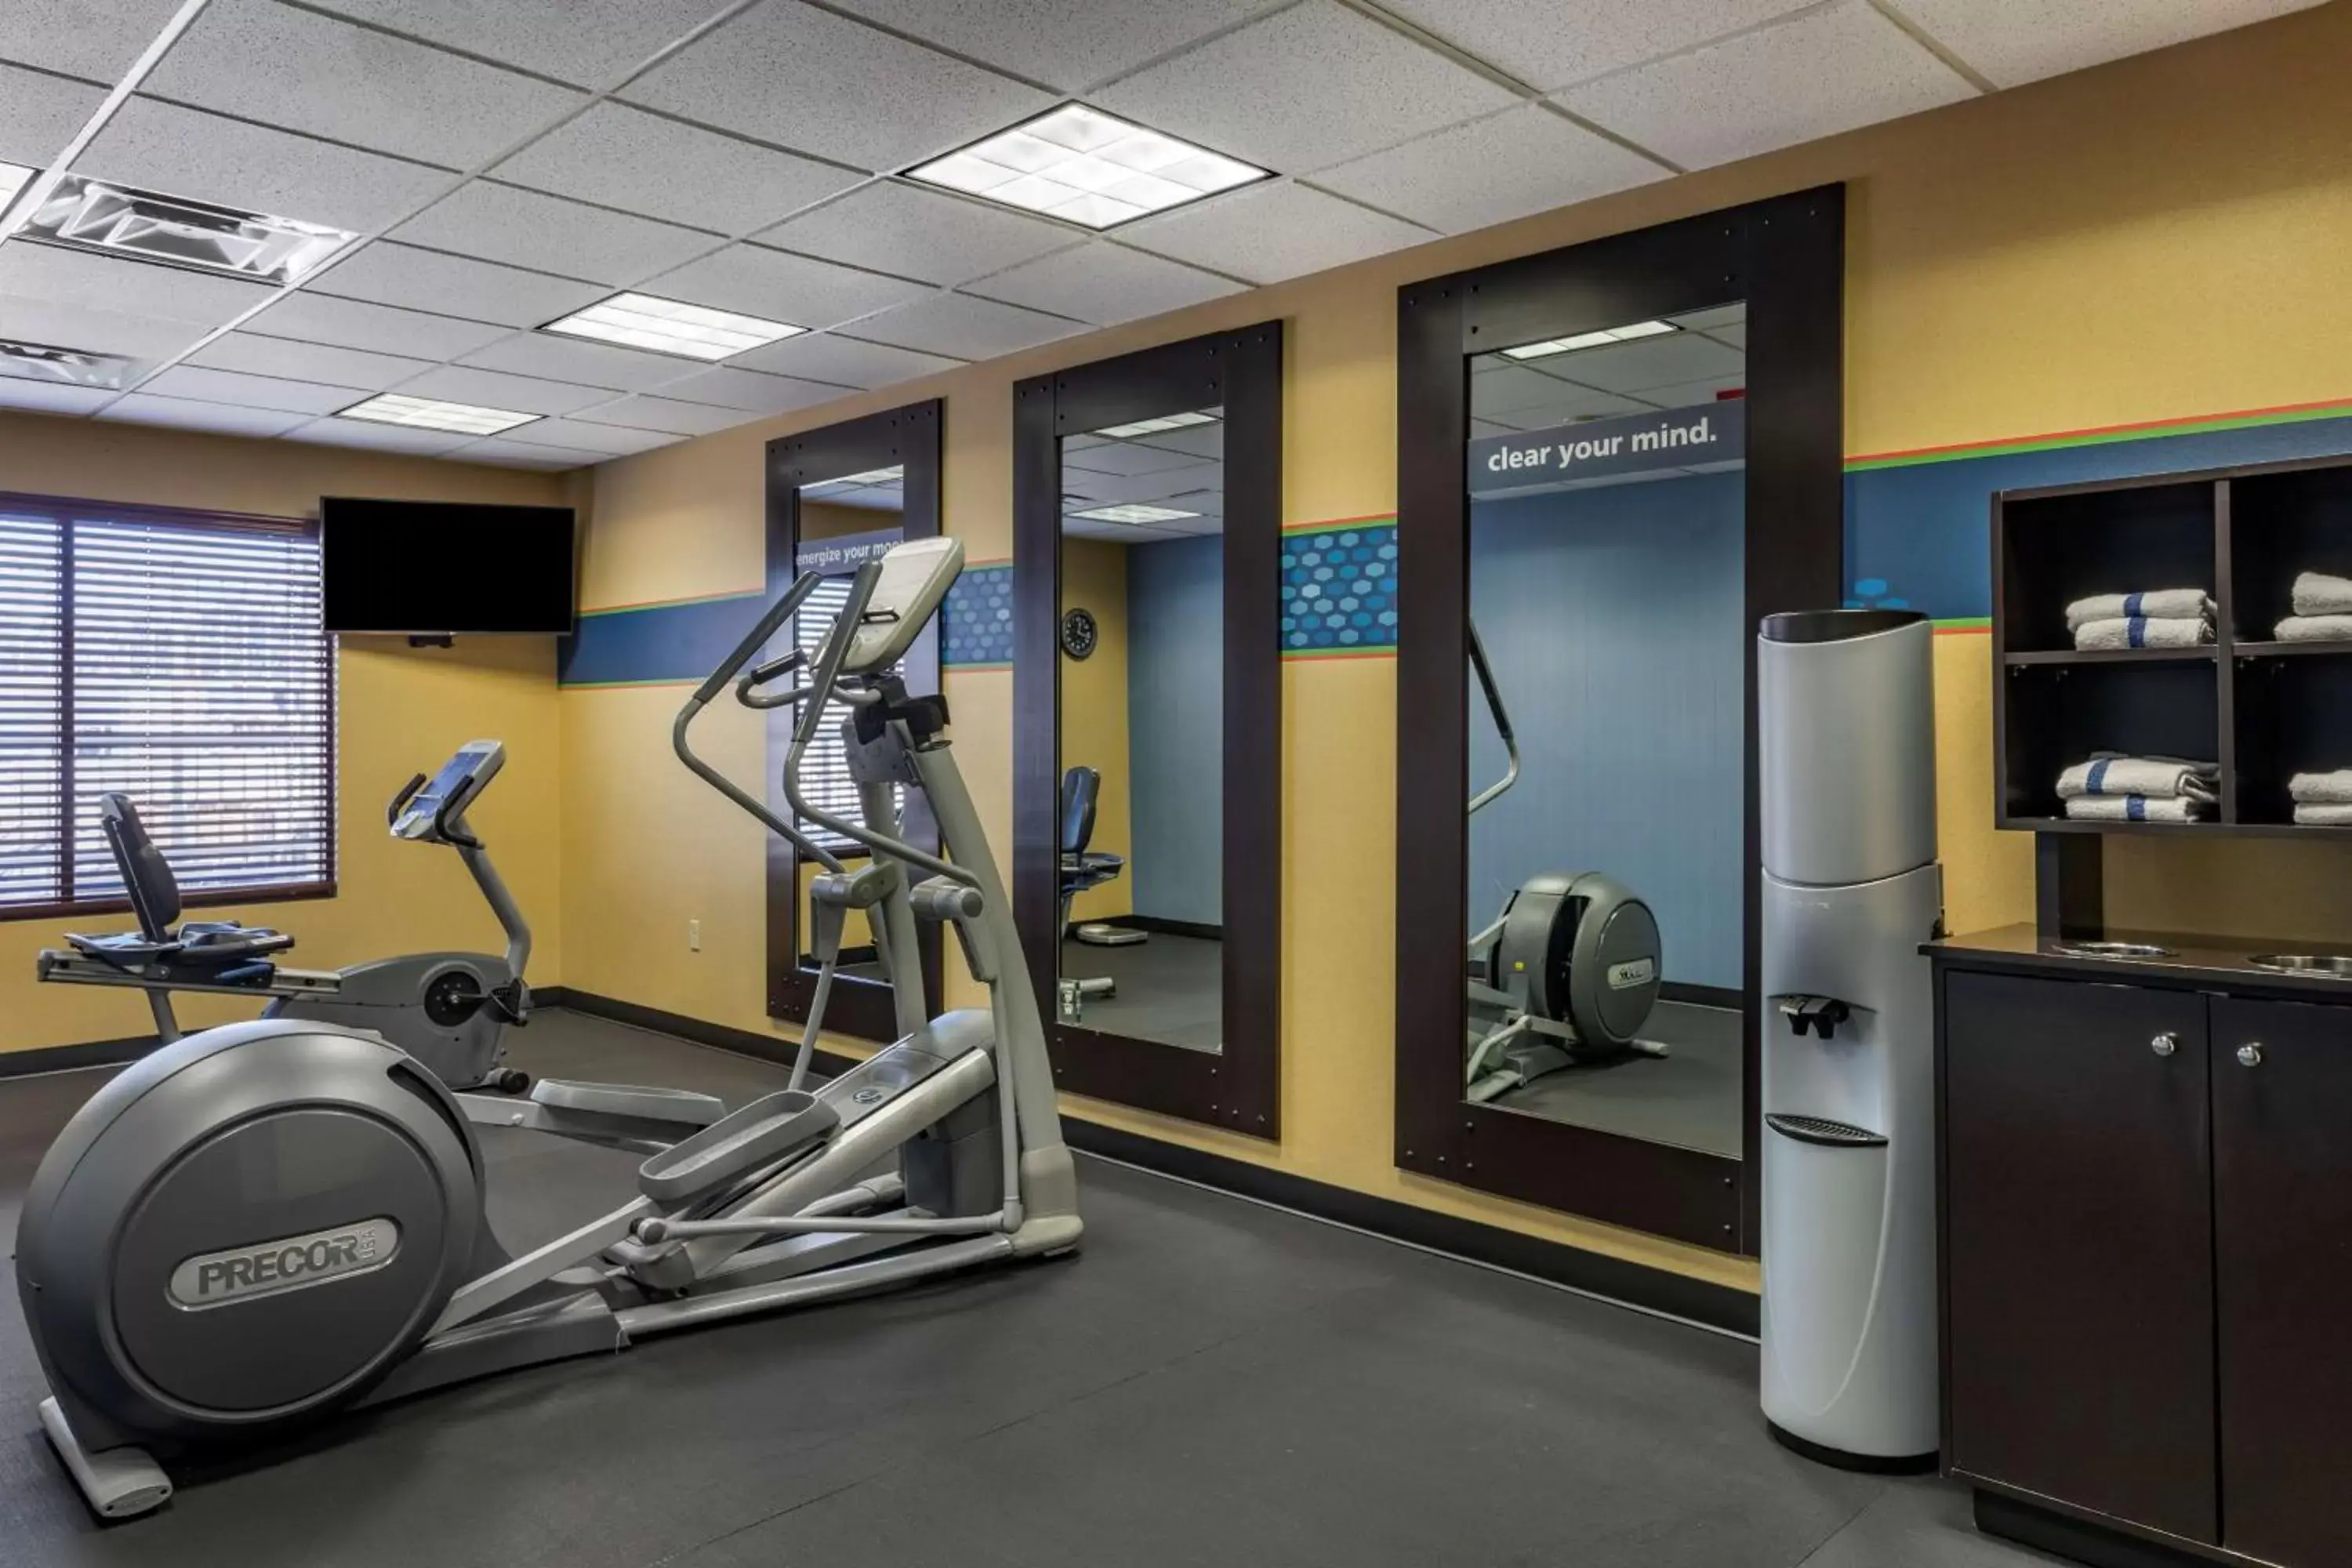 Fitness centre/facilities, Fitness Center/Facilities in Hampton Inn Norco/Corona